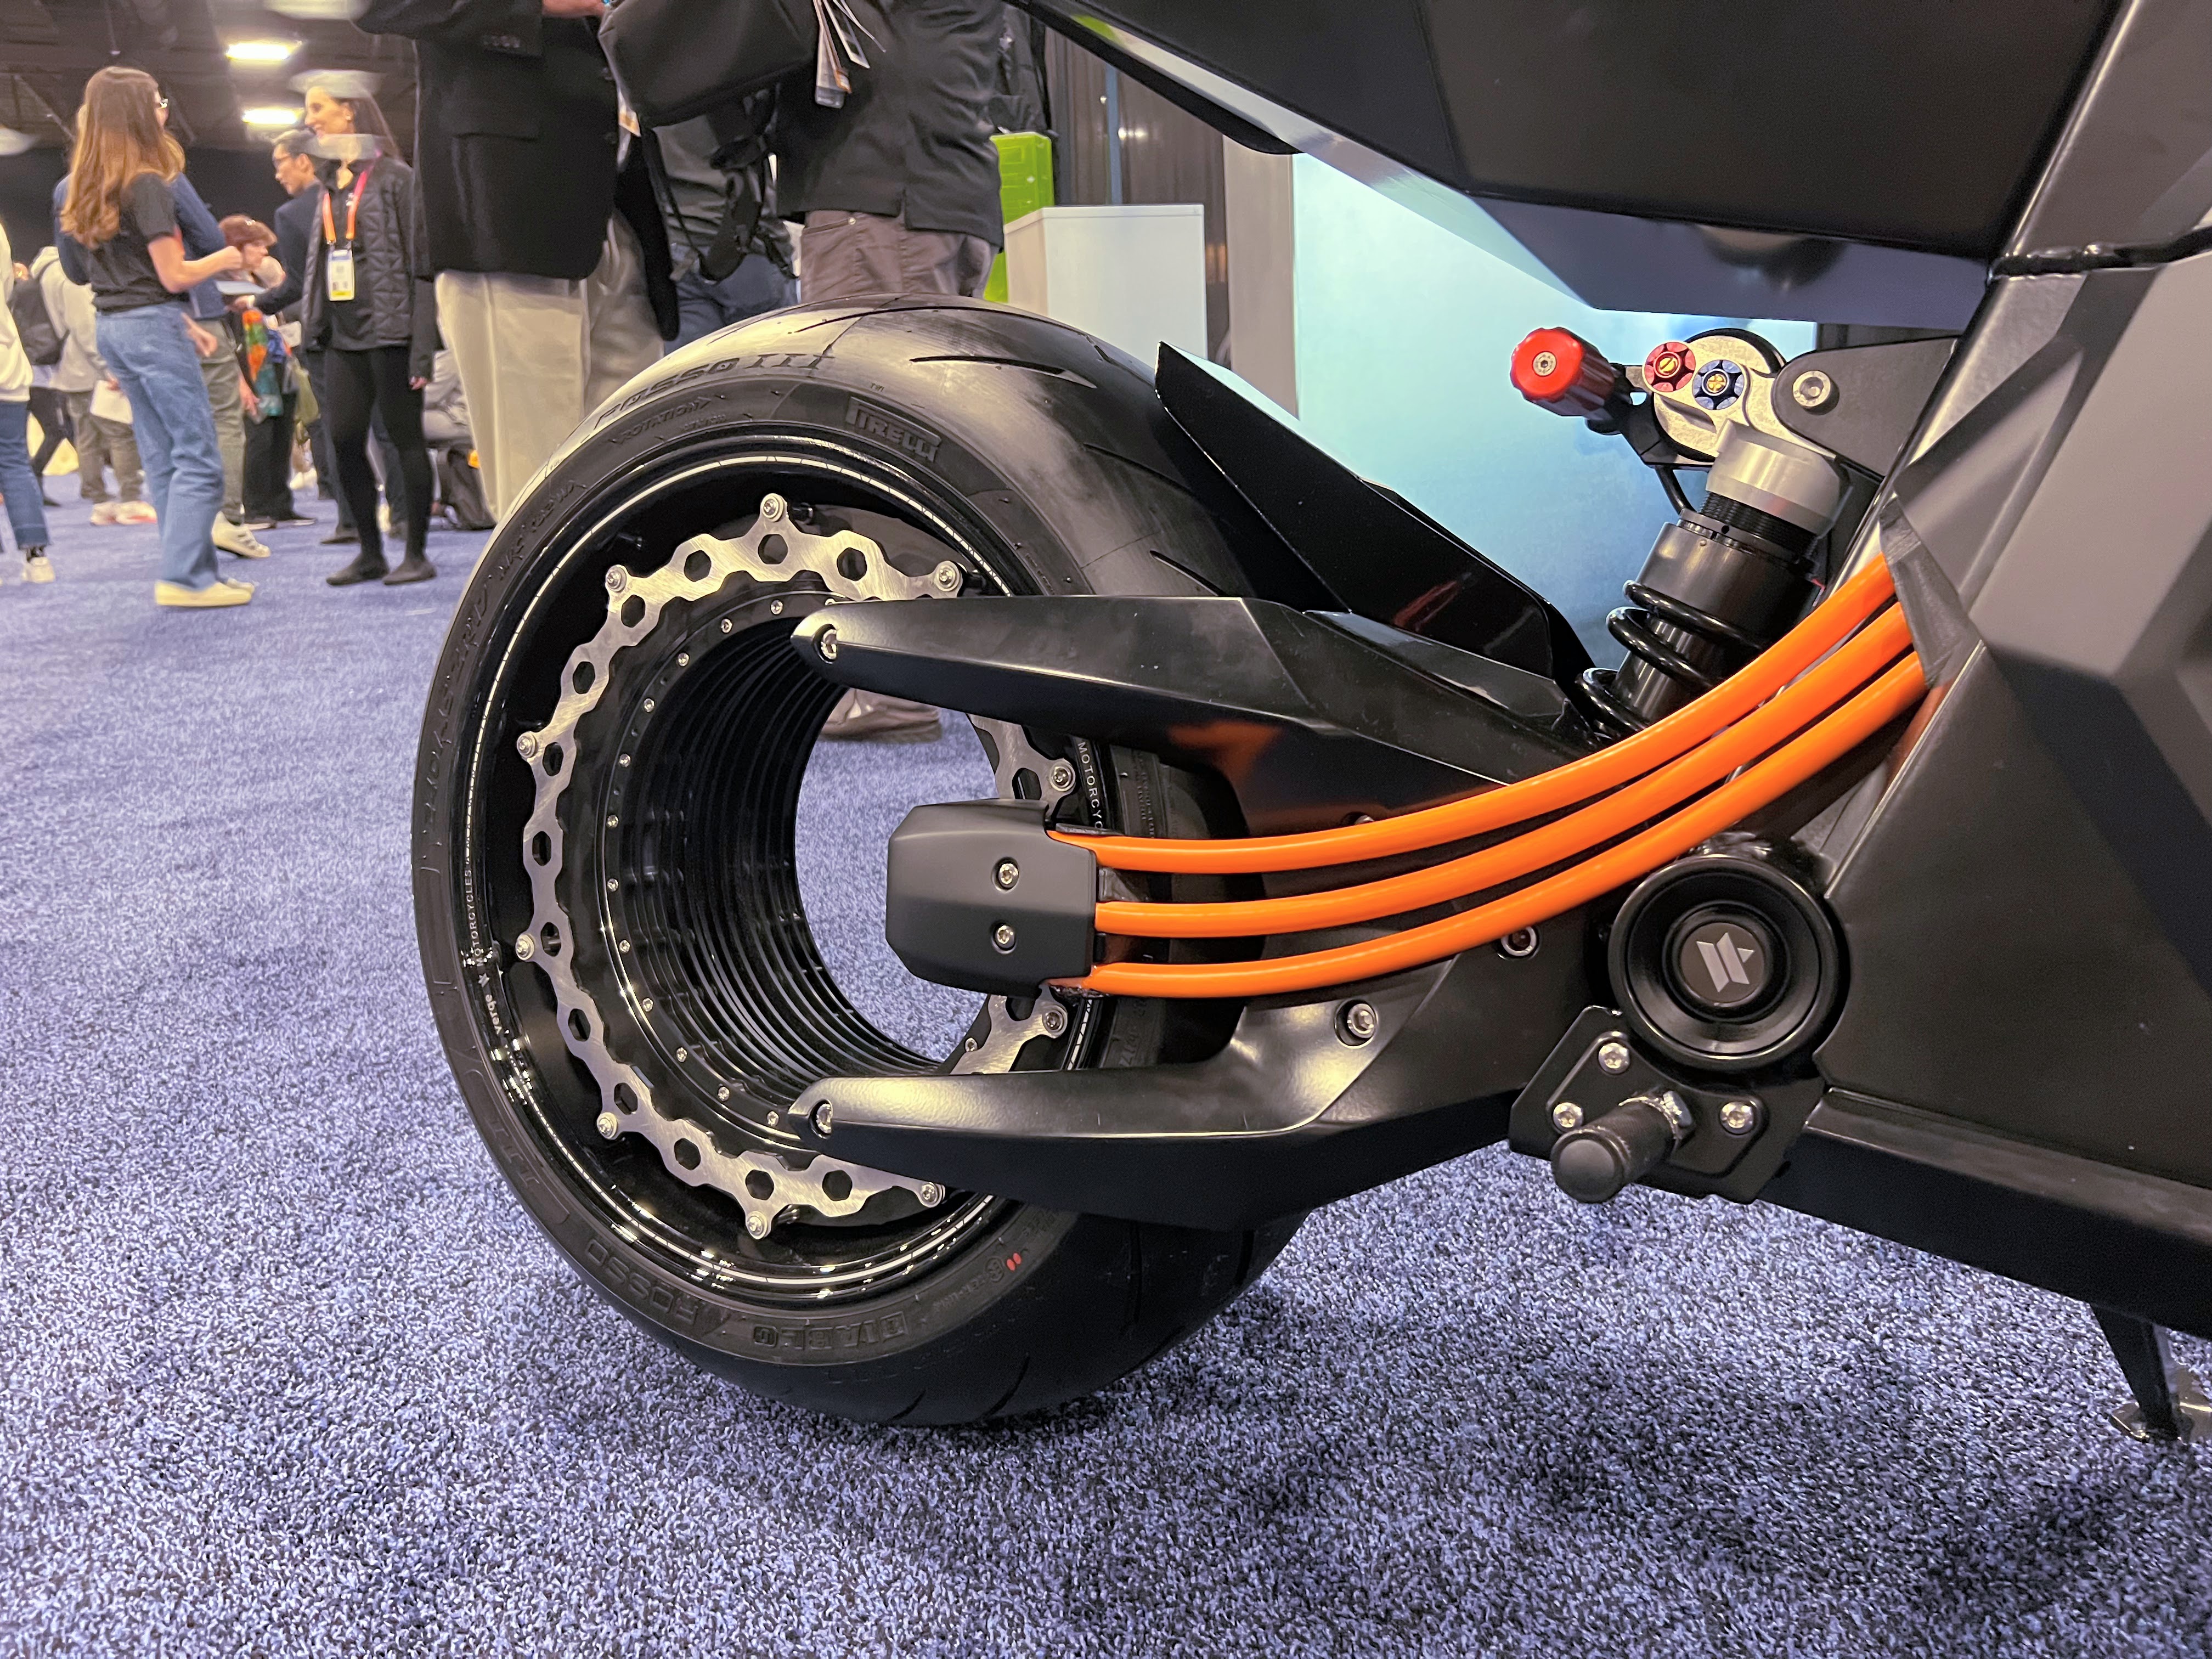 Todo o aro da roda traseira da motocicleta funciona como um motor, eliminando a necessidade de uma corrente ou correia para acionar a roda.